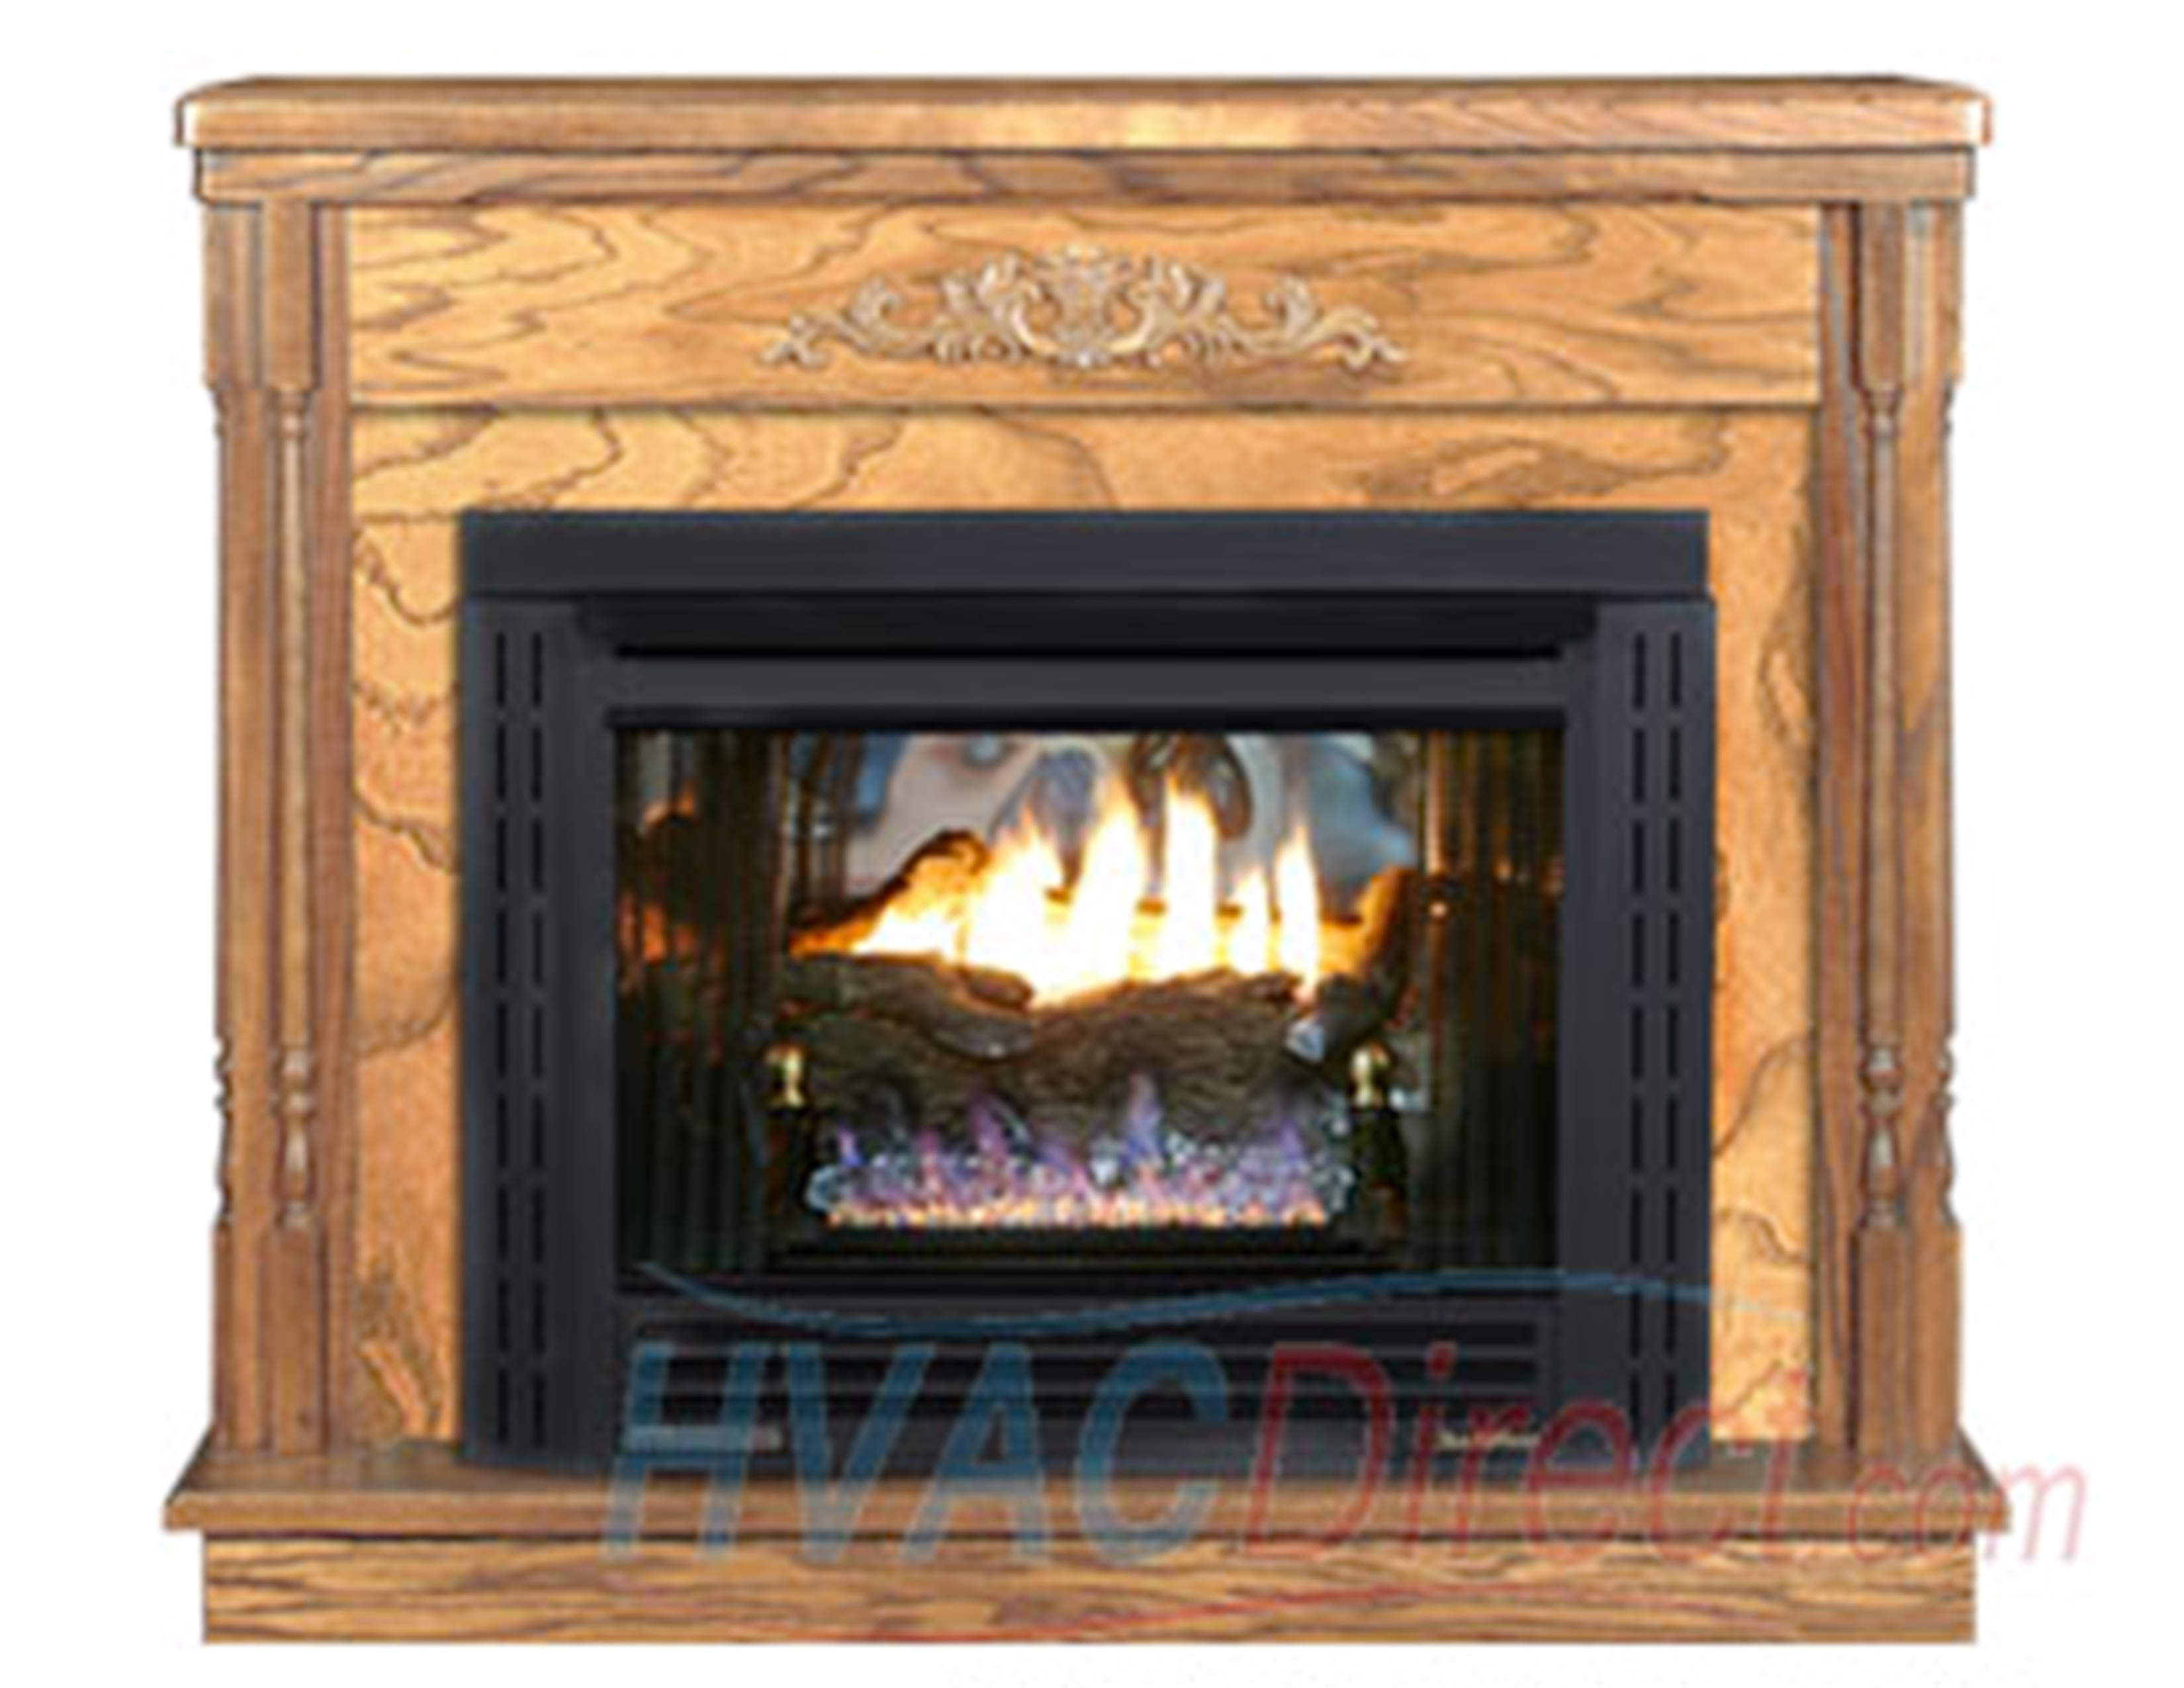 Natural Gas Fireplace Heater Inspirational Buck Stove Model 34zc Zero Clearance Vent Free Gas Fireplace